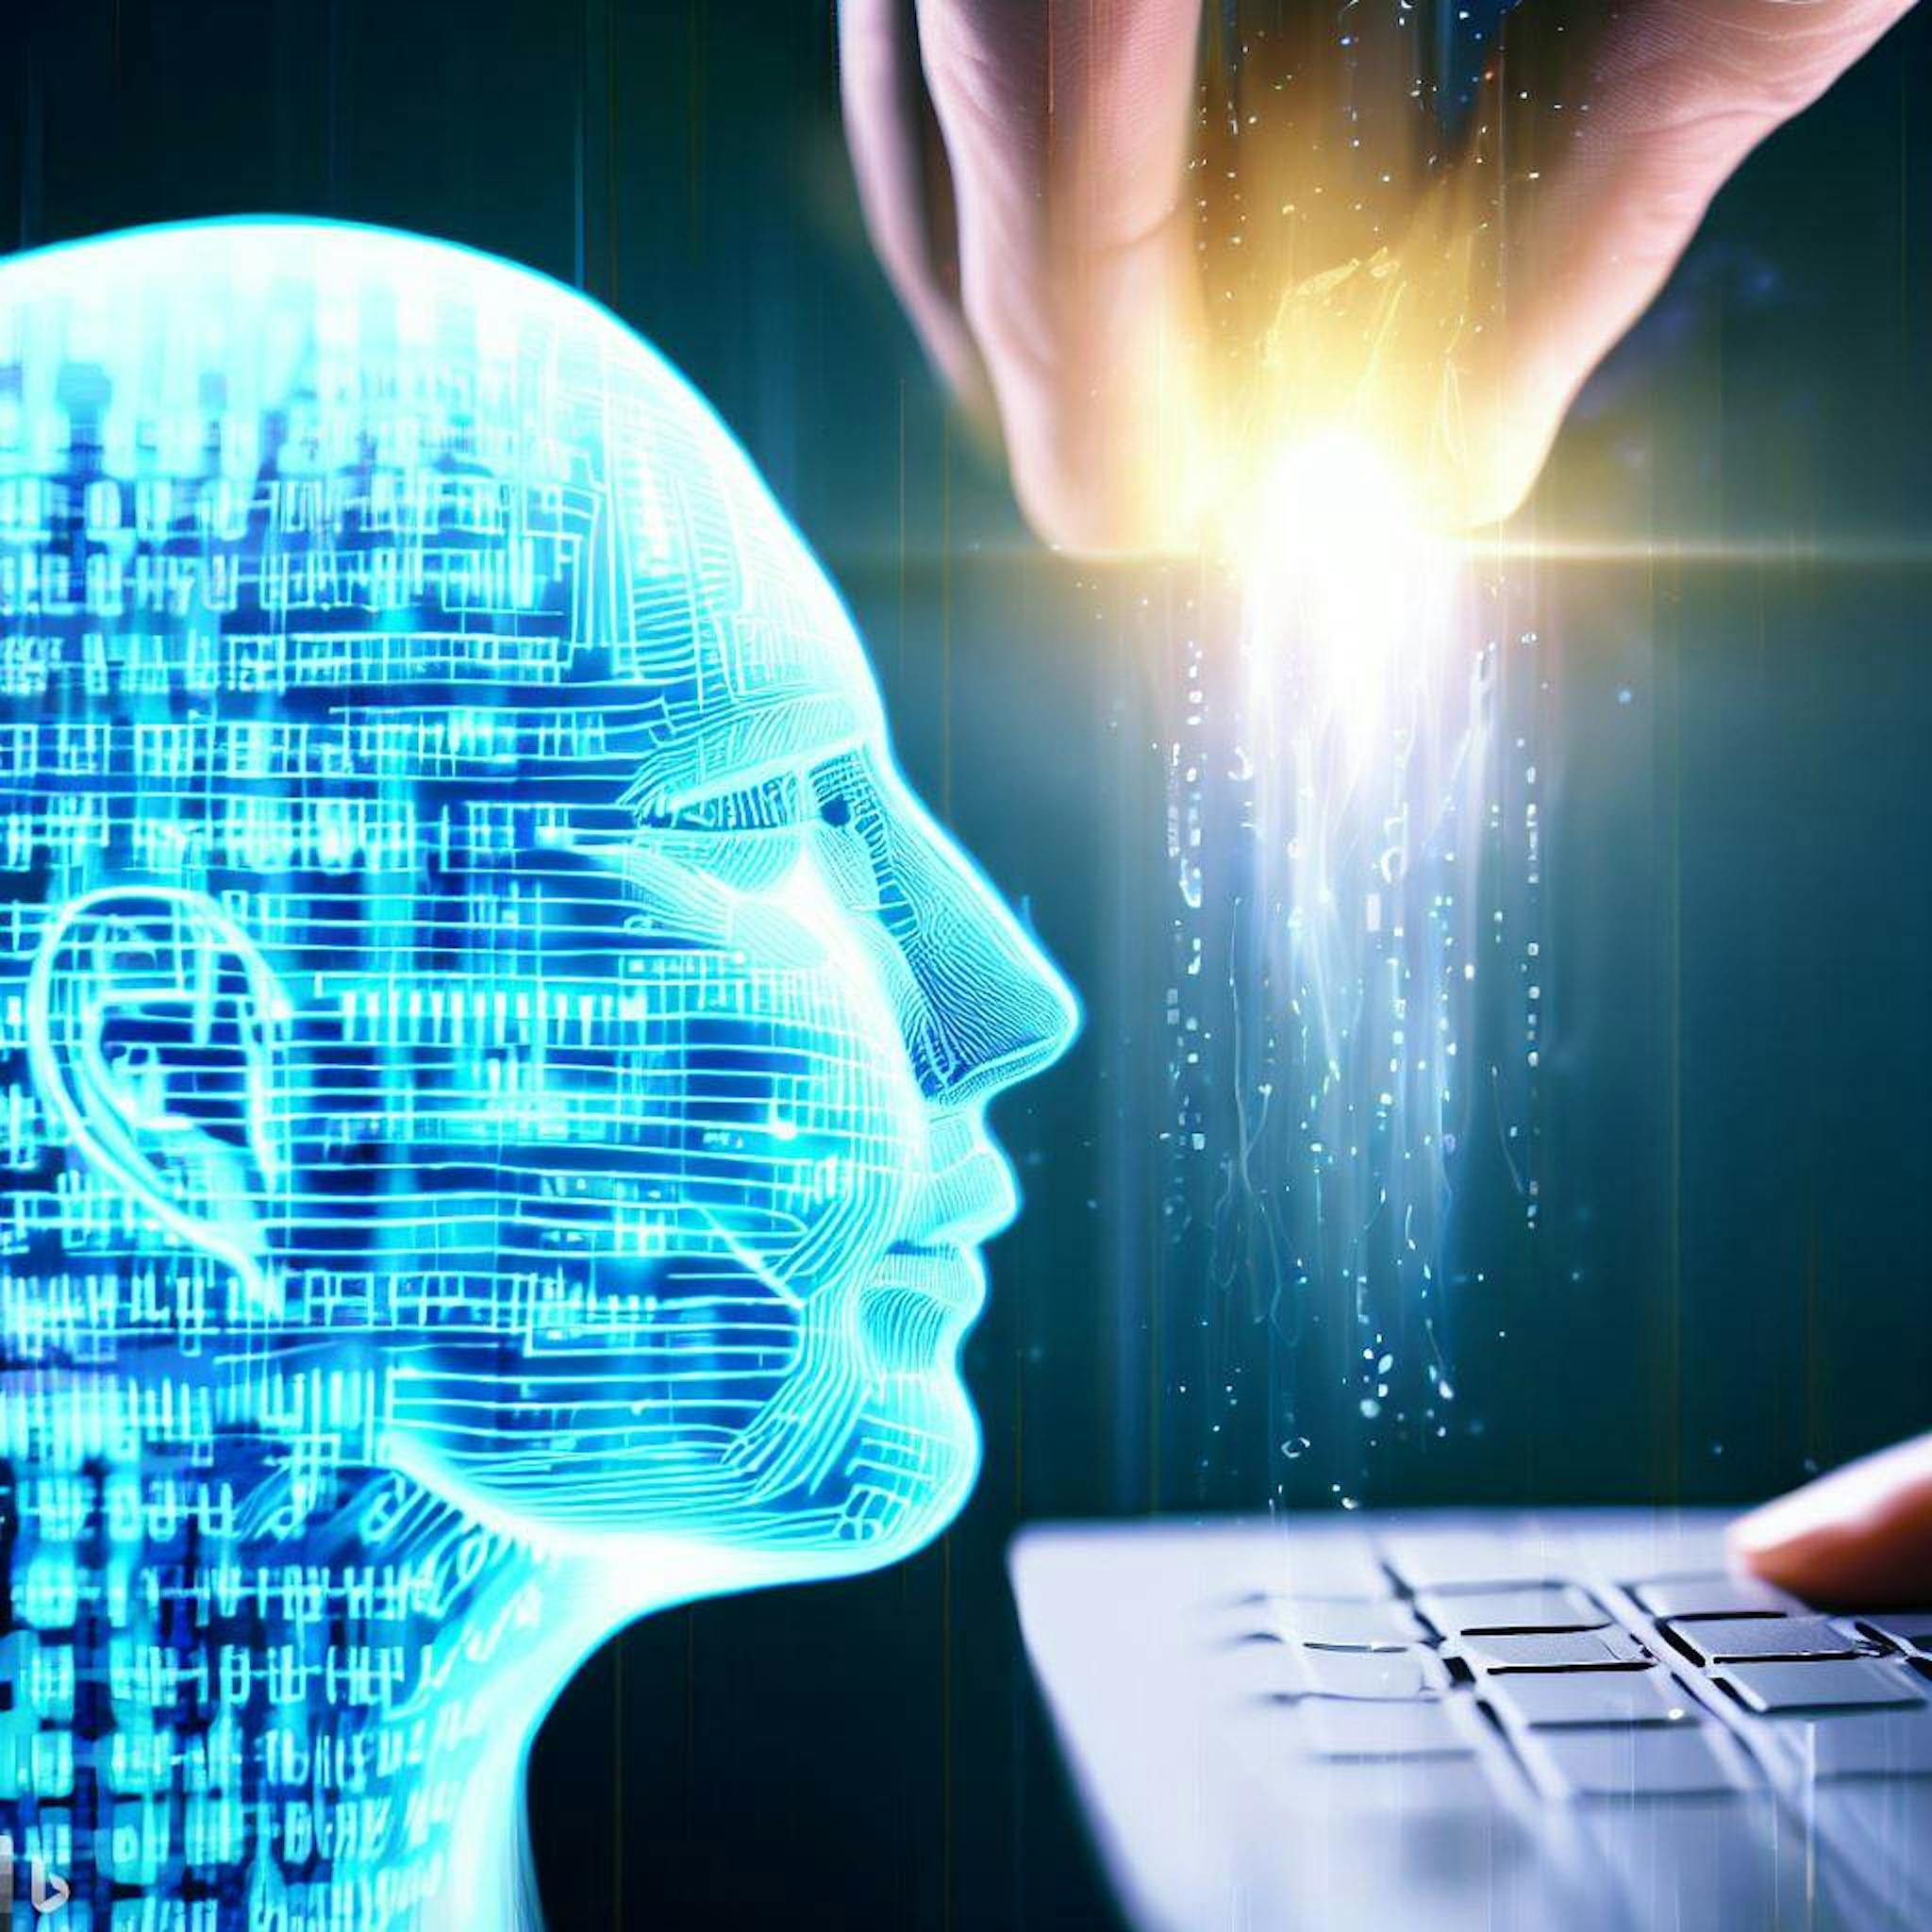 Uploading Human Consciousness to a Digital Computer